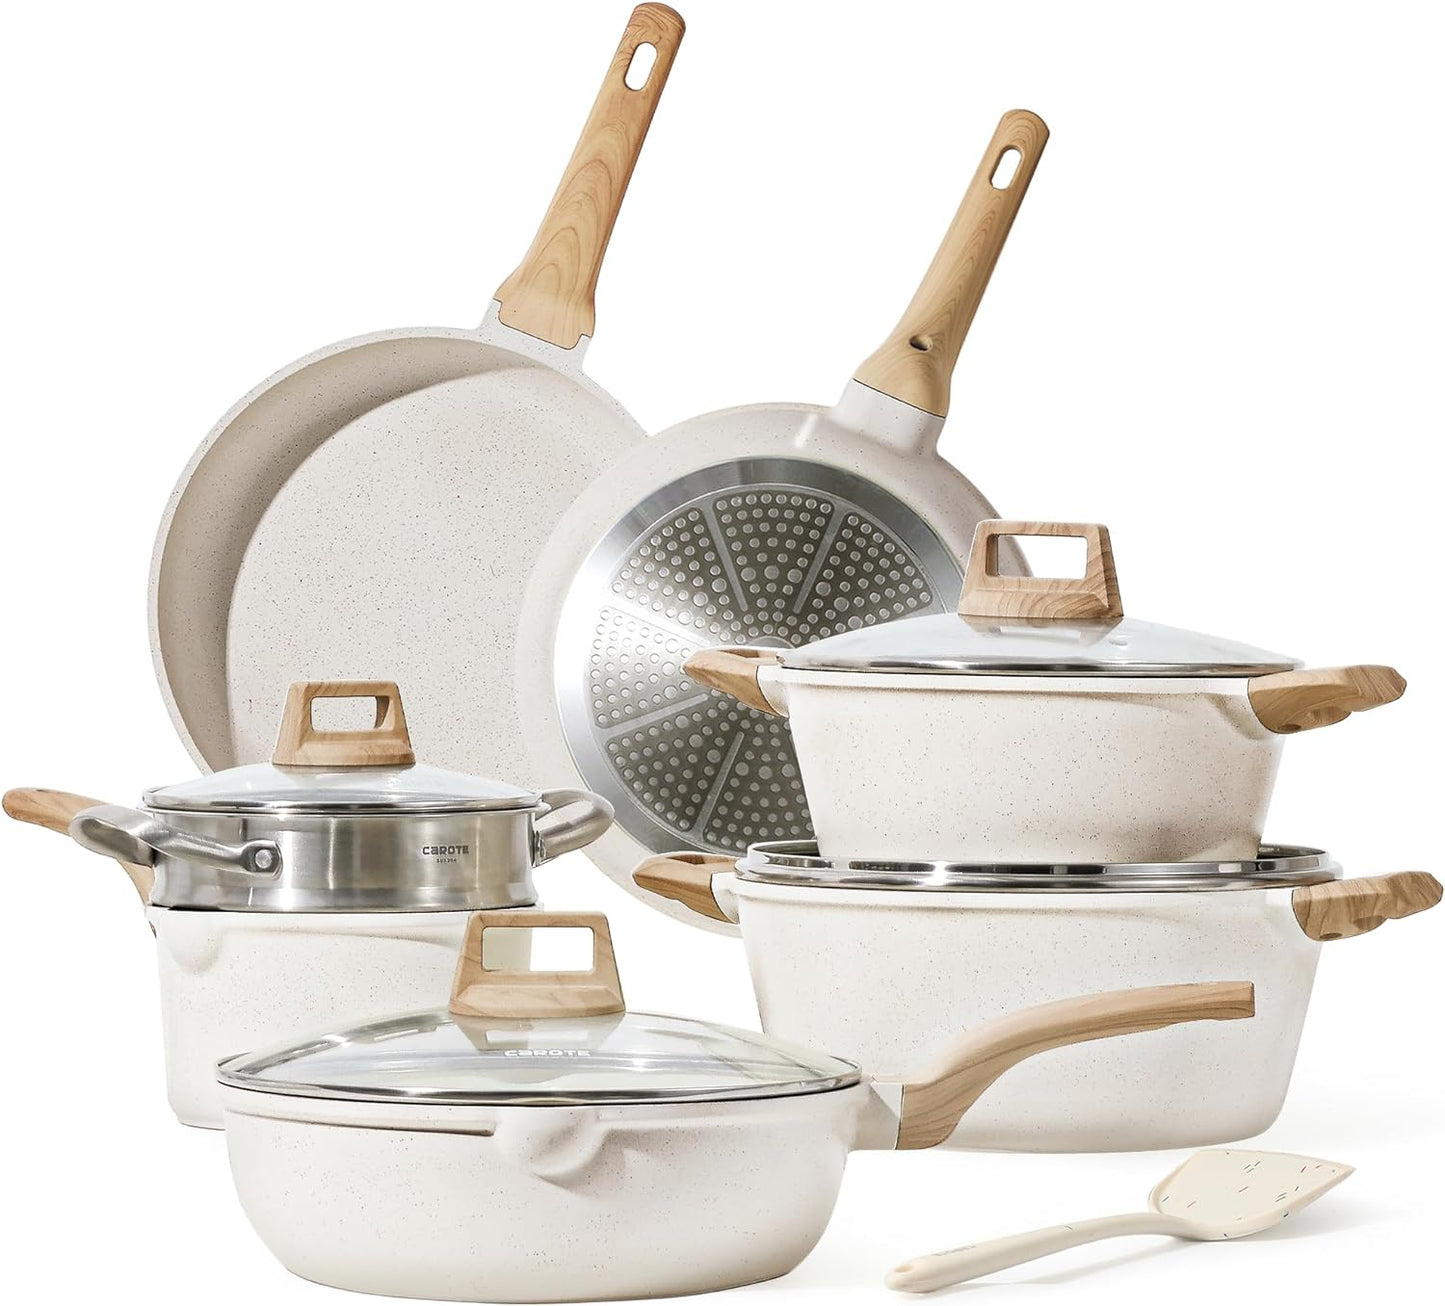 CAROTE Pots and Pans Set Nonstick, White Granite Induction Kitchen Cookware Set, 10 Pcs Non Stick Cooking Set w\/Frying Pans & Saucepans(PFOS, PFOA Free)